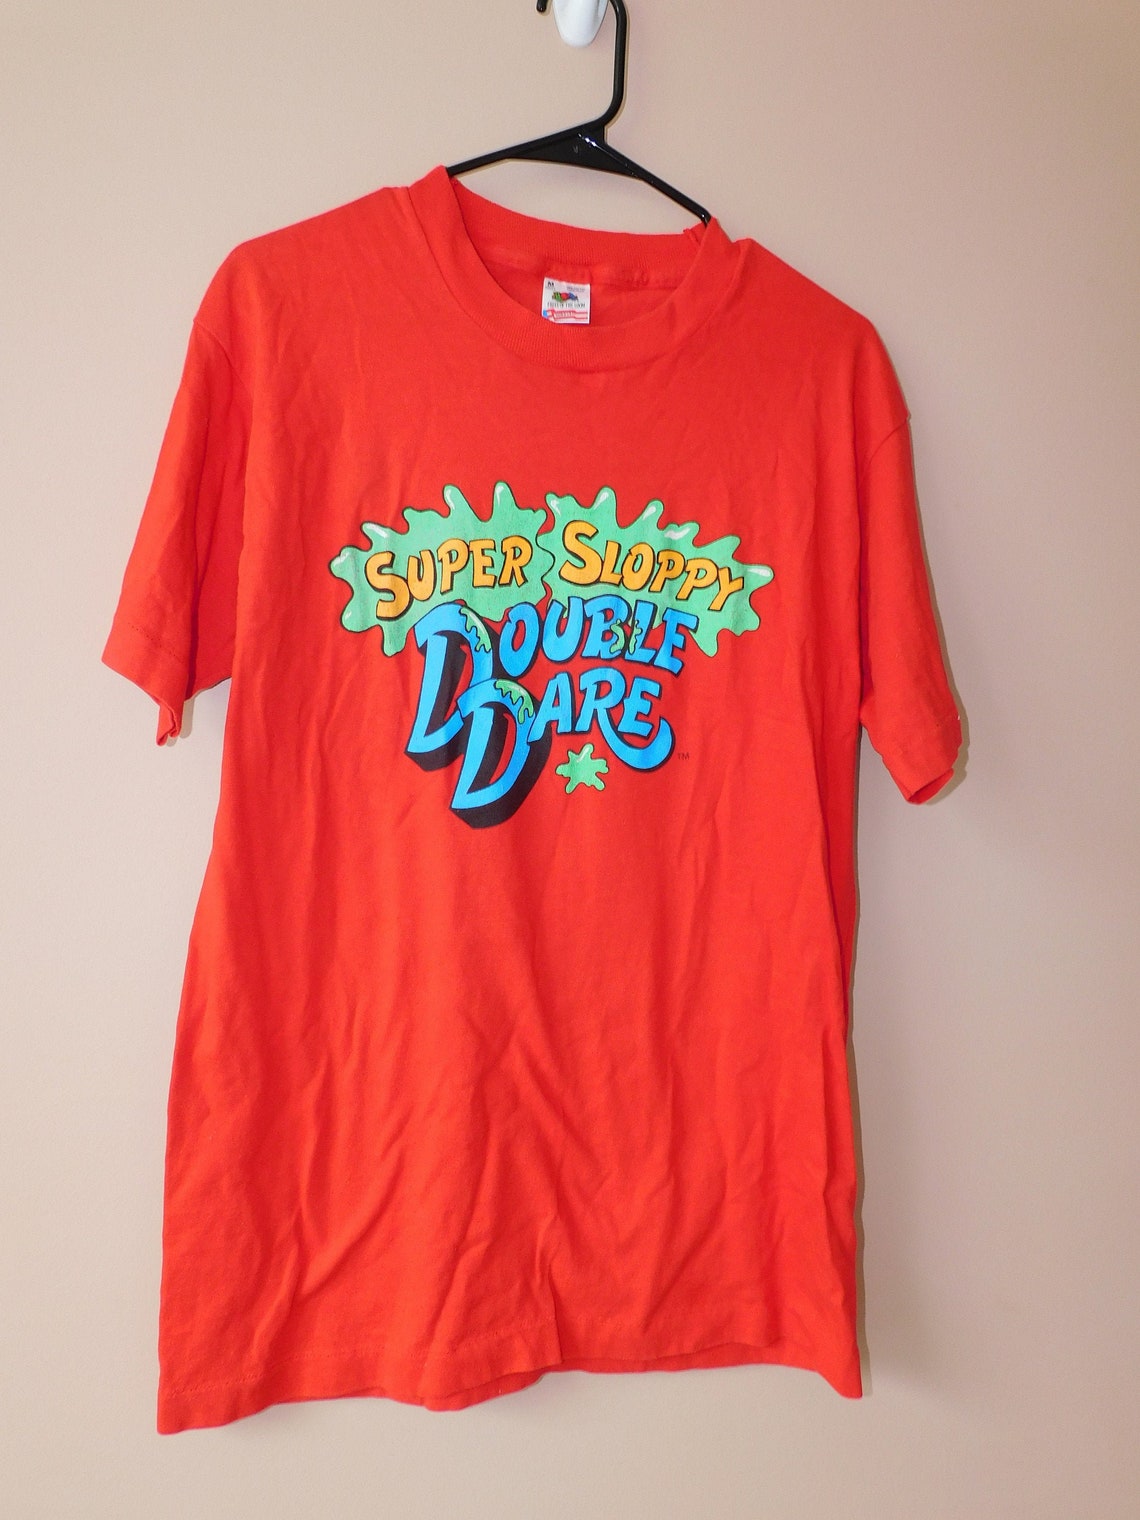 Vintage 90s Super Sloppy Double Dare t shirt Nickelodeon tv | Etsy